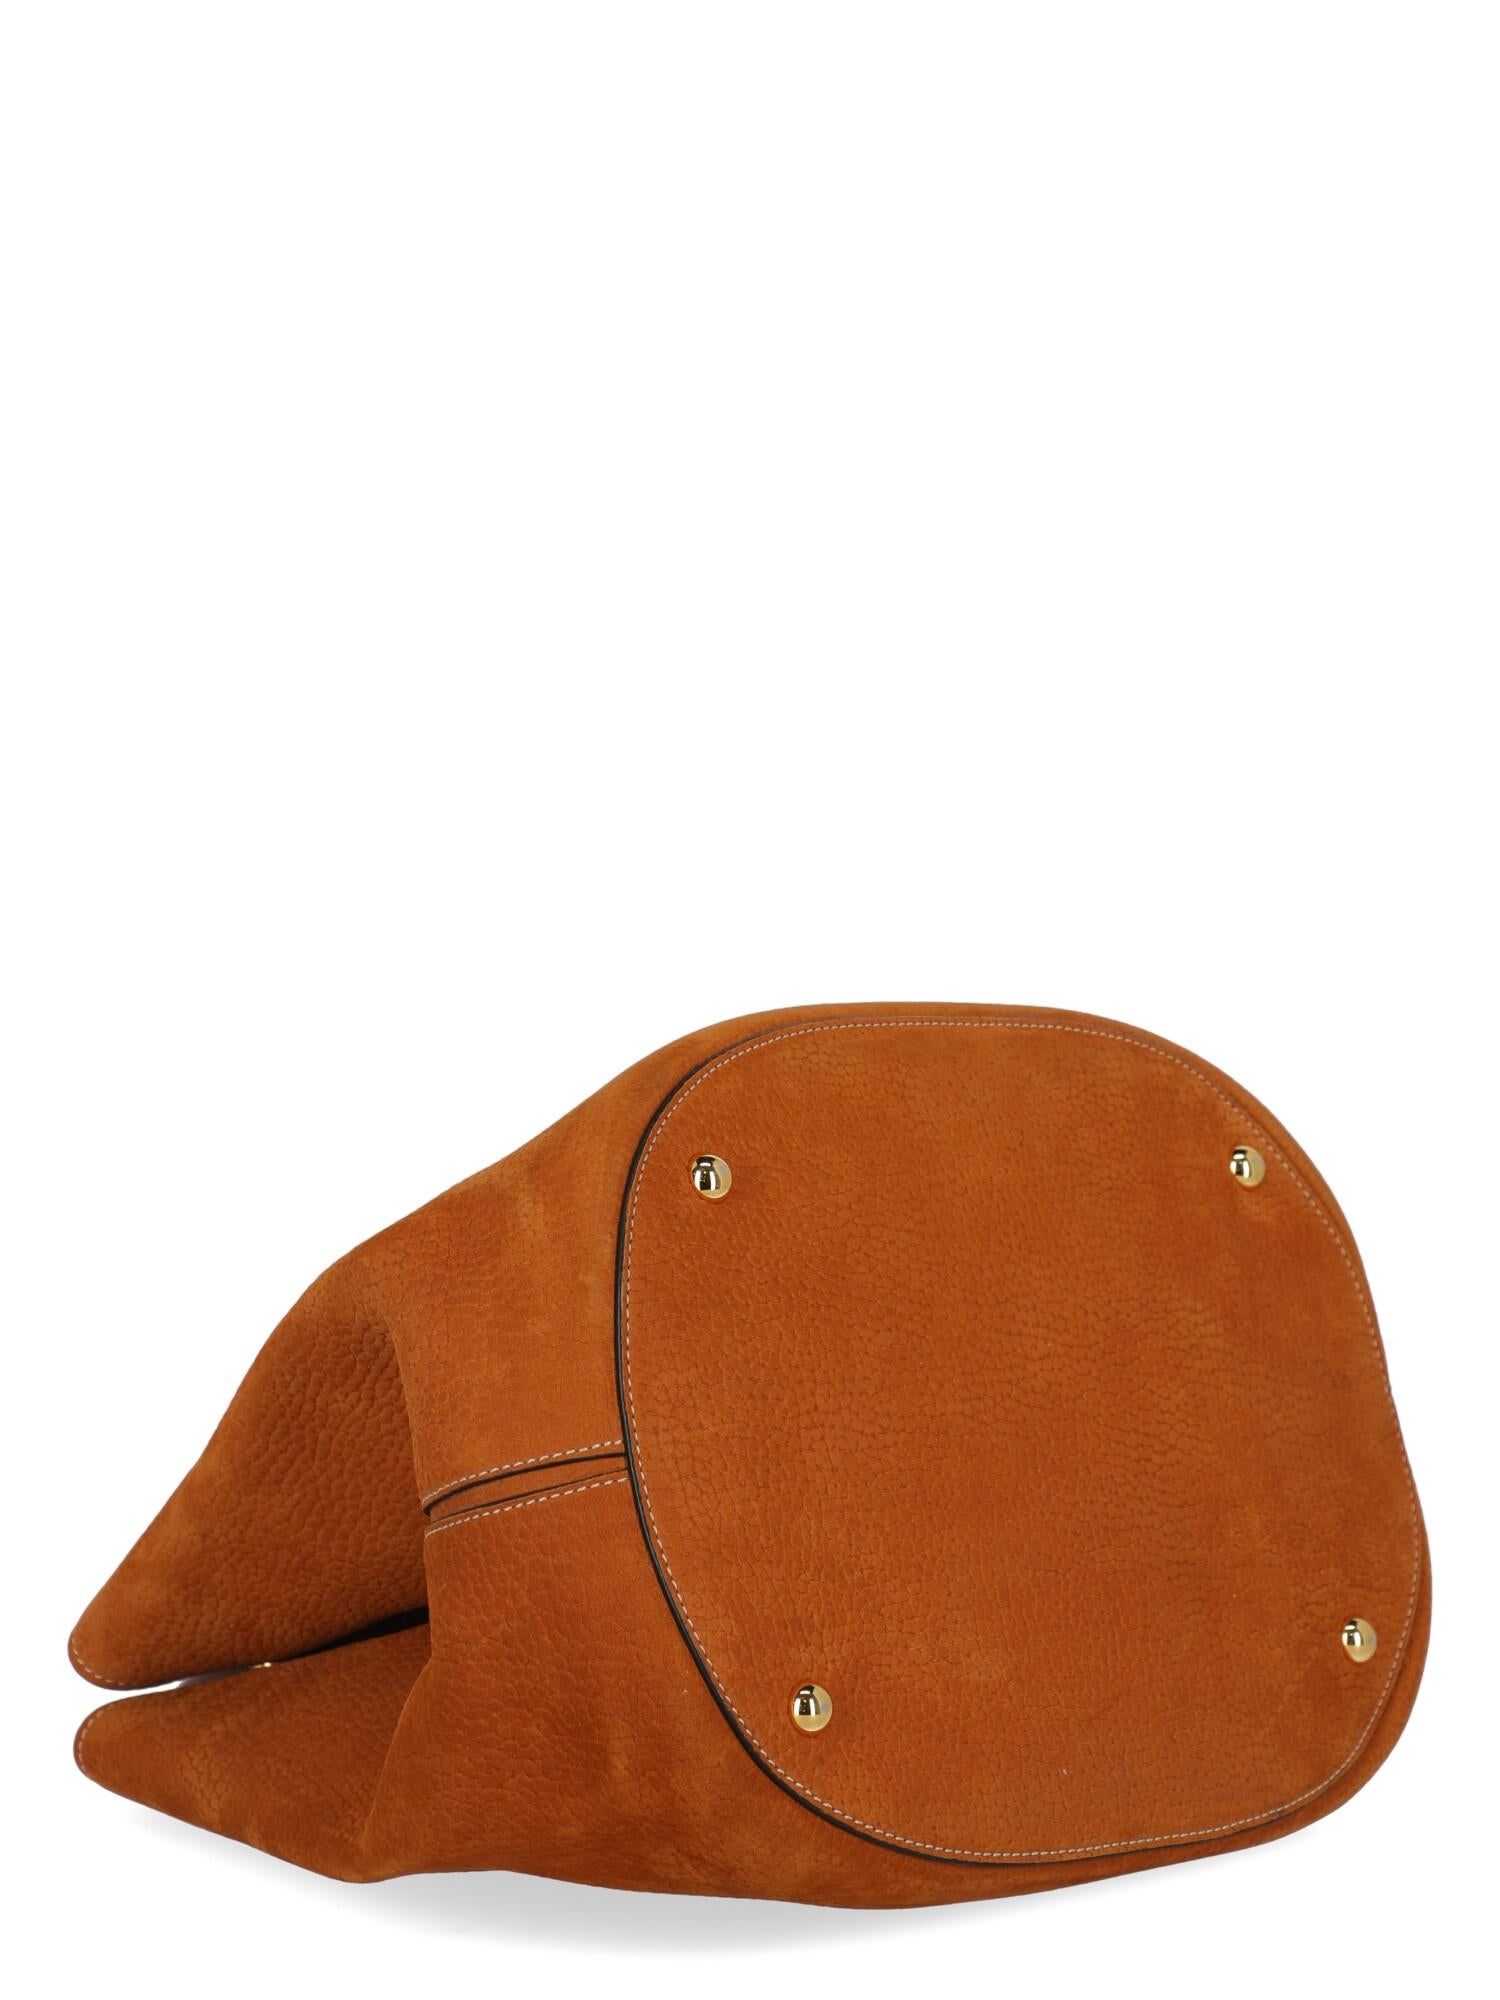 Women's Marni Women Handbags Orange Leather  For Sale